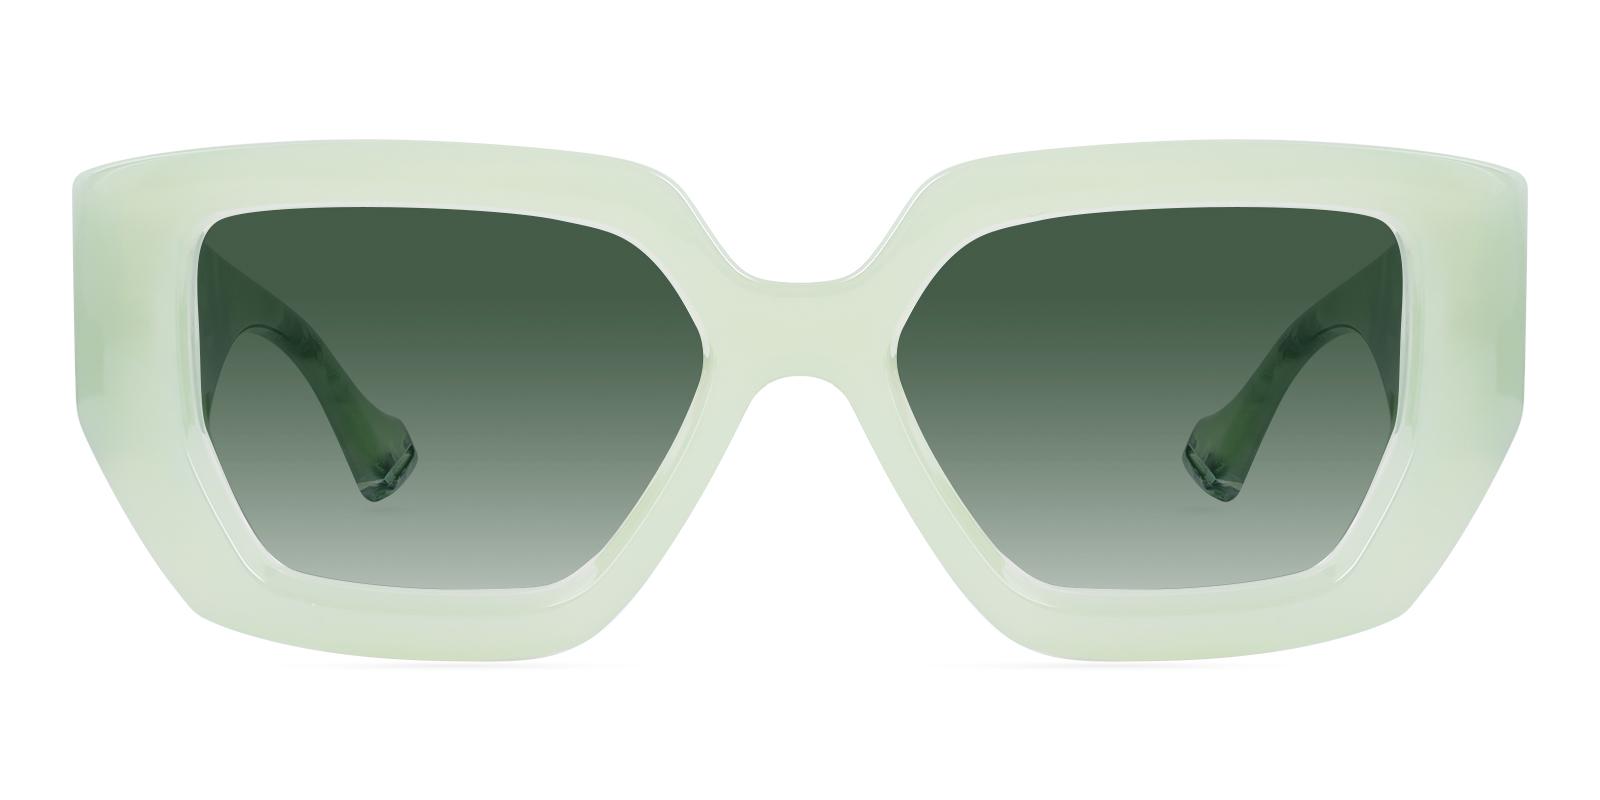 Styleion Green Acetate Sunglasses , UniversalBridgeFit Frames from ABBE Glasses